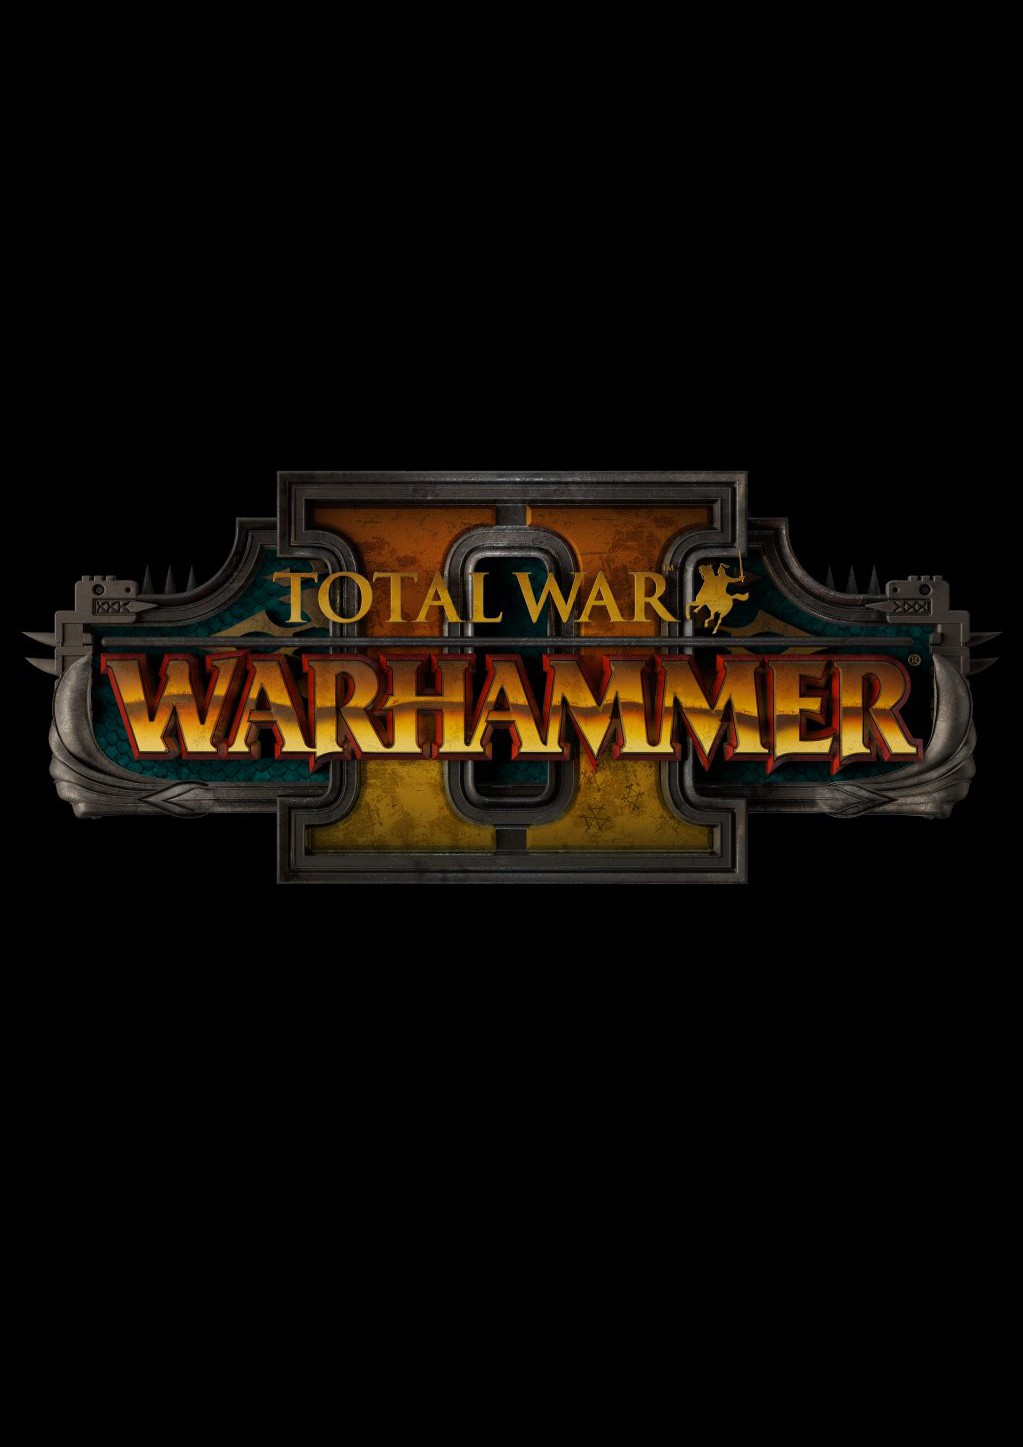 Total War WARHAMMER 2 Steam Key Gloabl